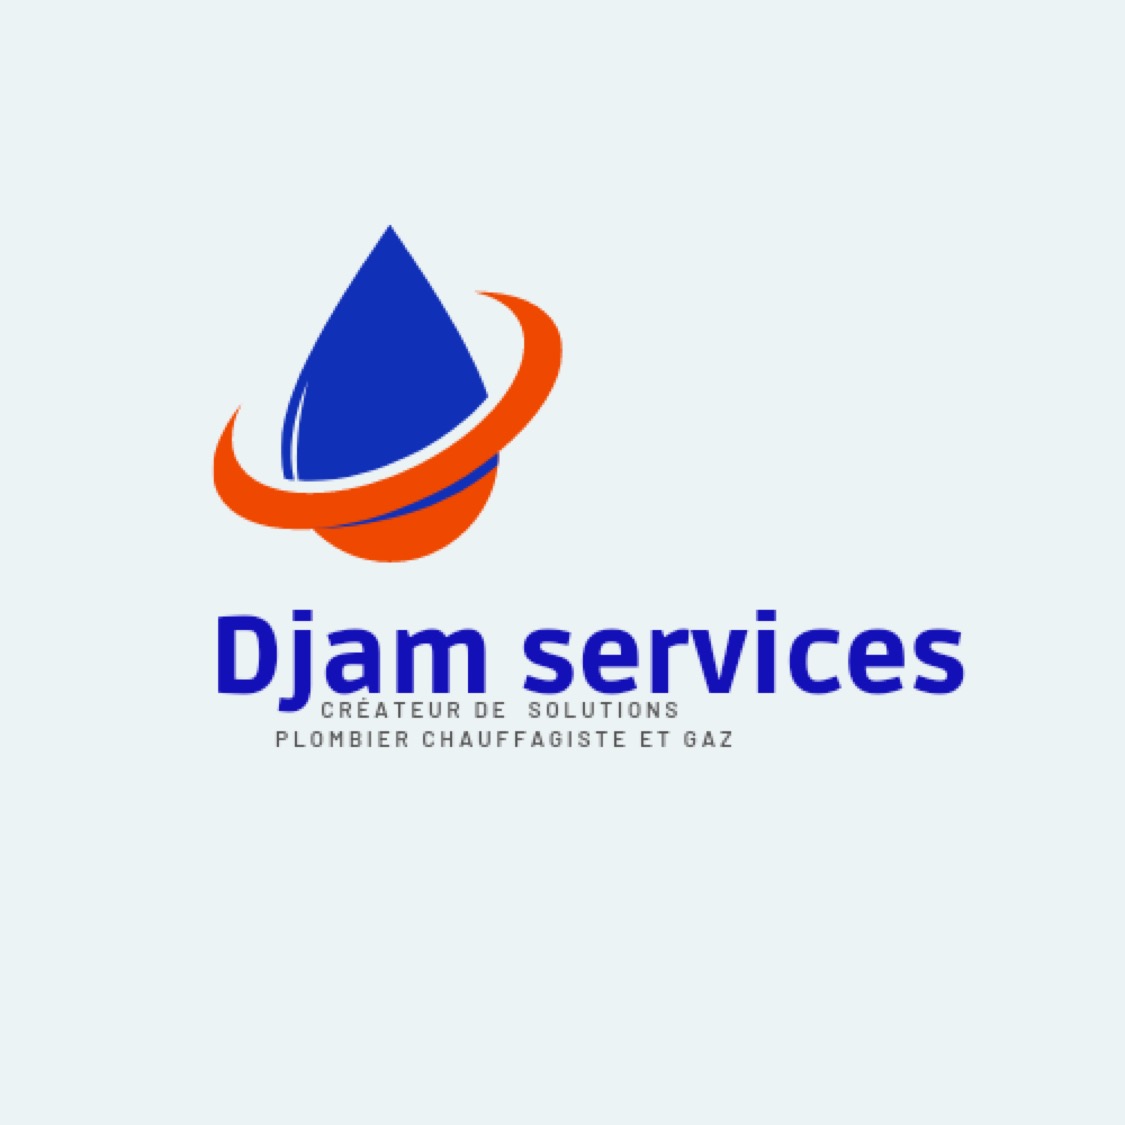 djam services